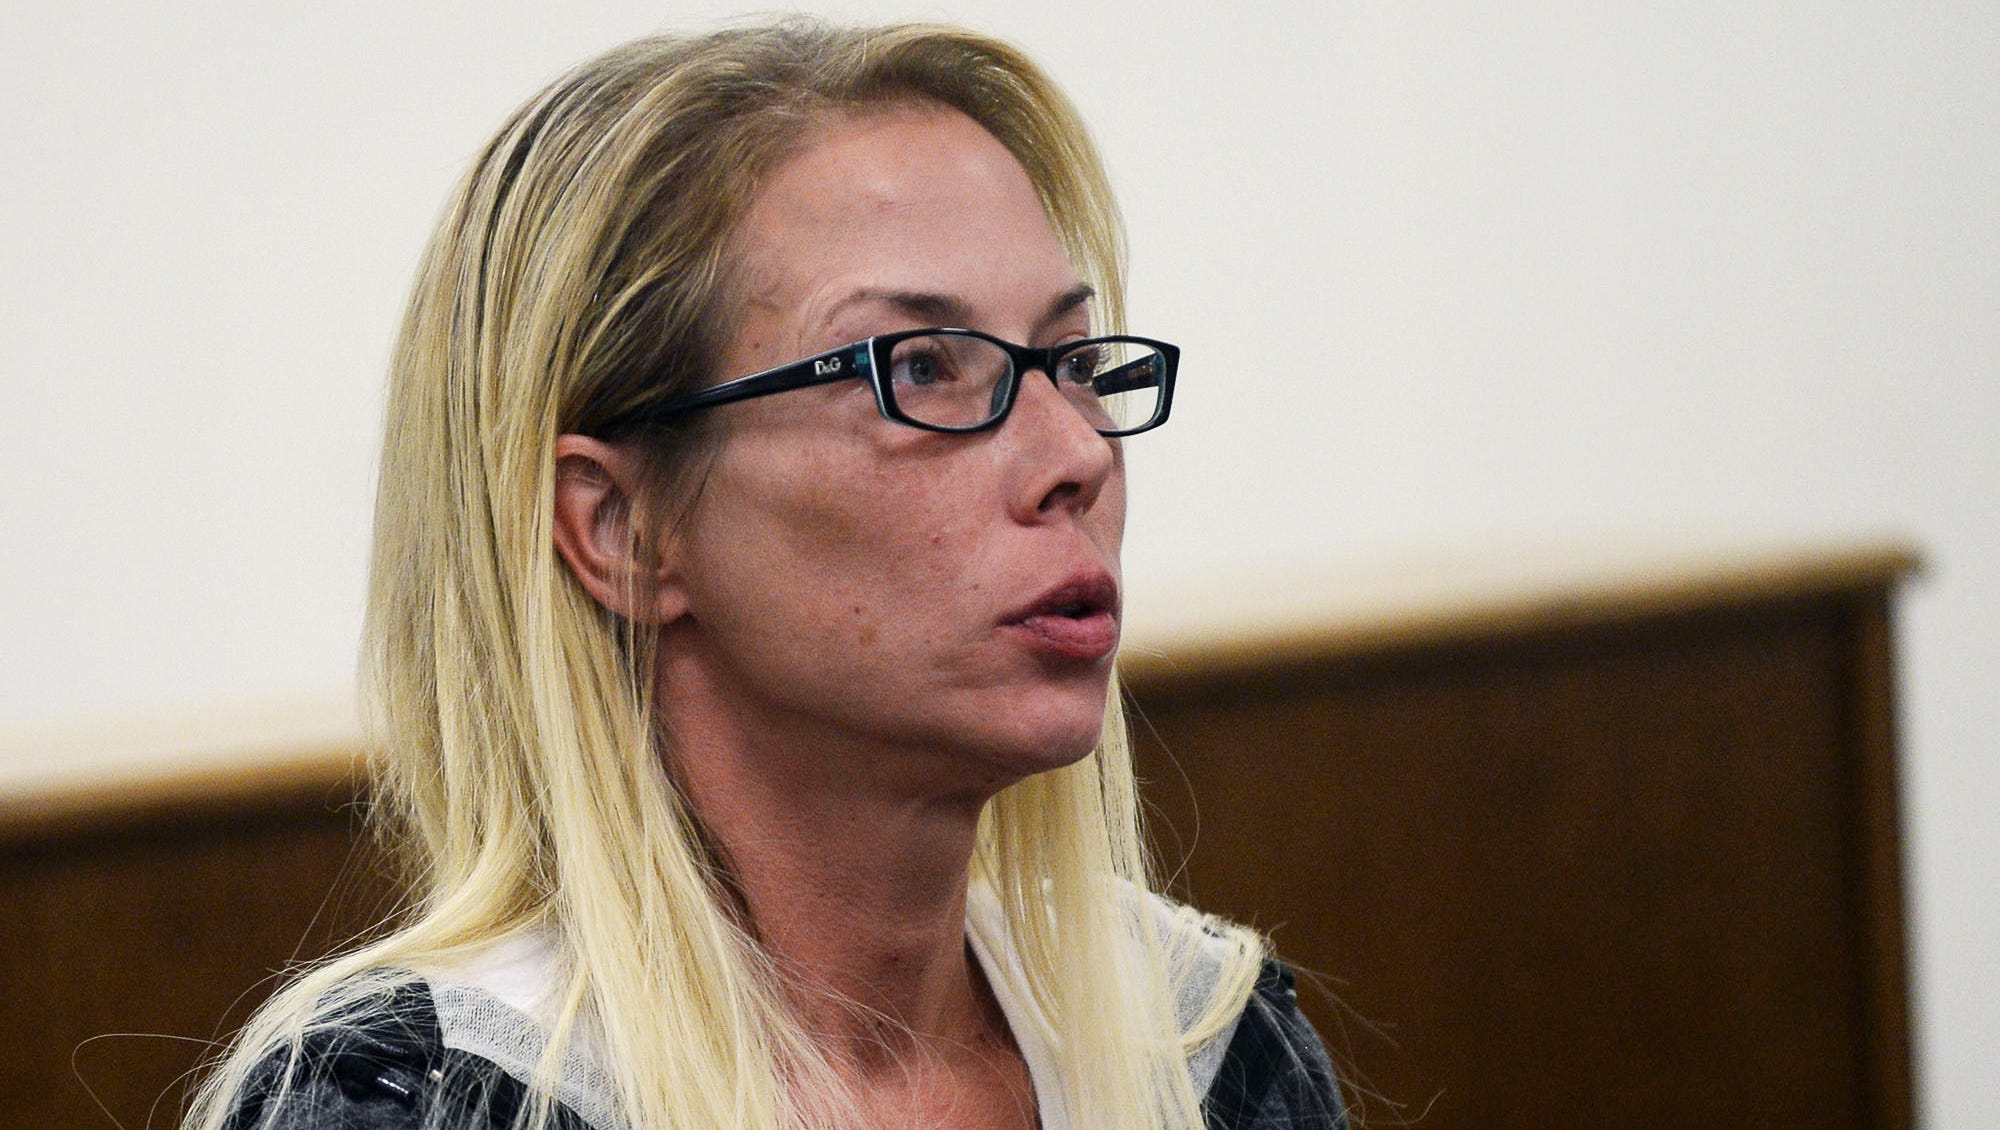 Fine, probation, no jail for Eminem's ex-wife Mathers